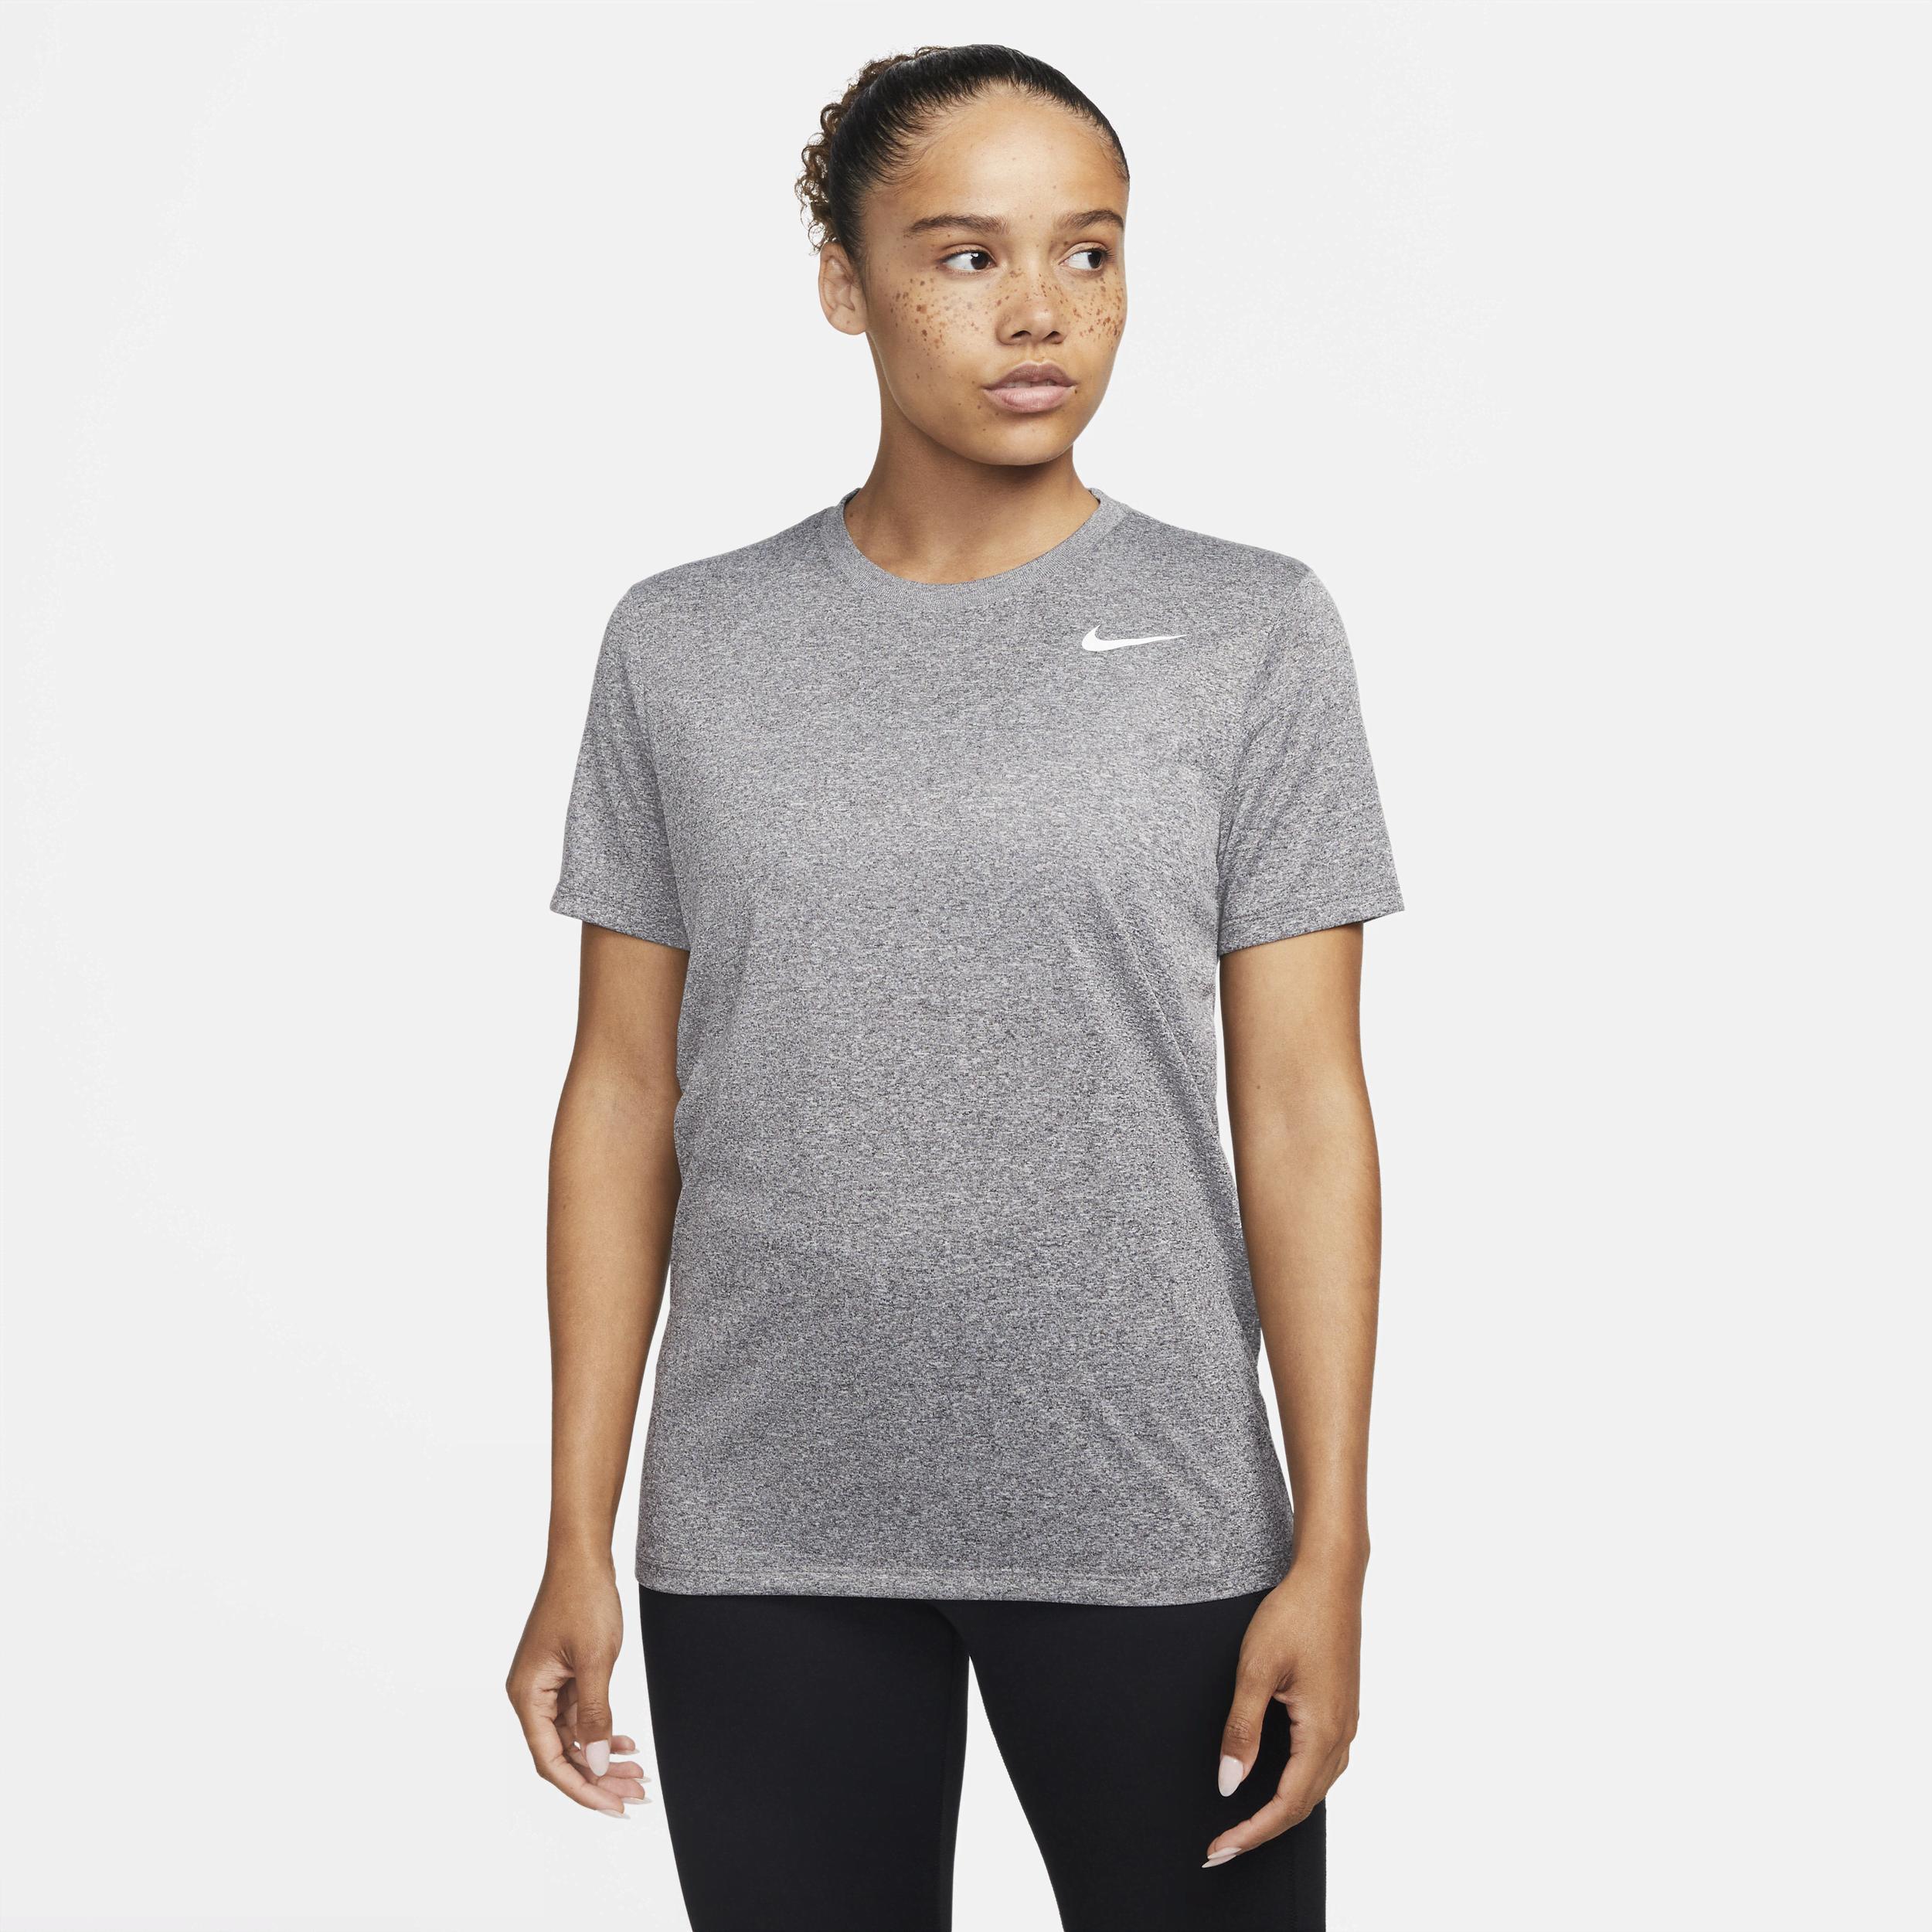 Nike Women's Dri-FIT T-Shirt Product Image